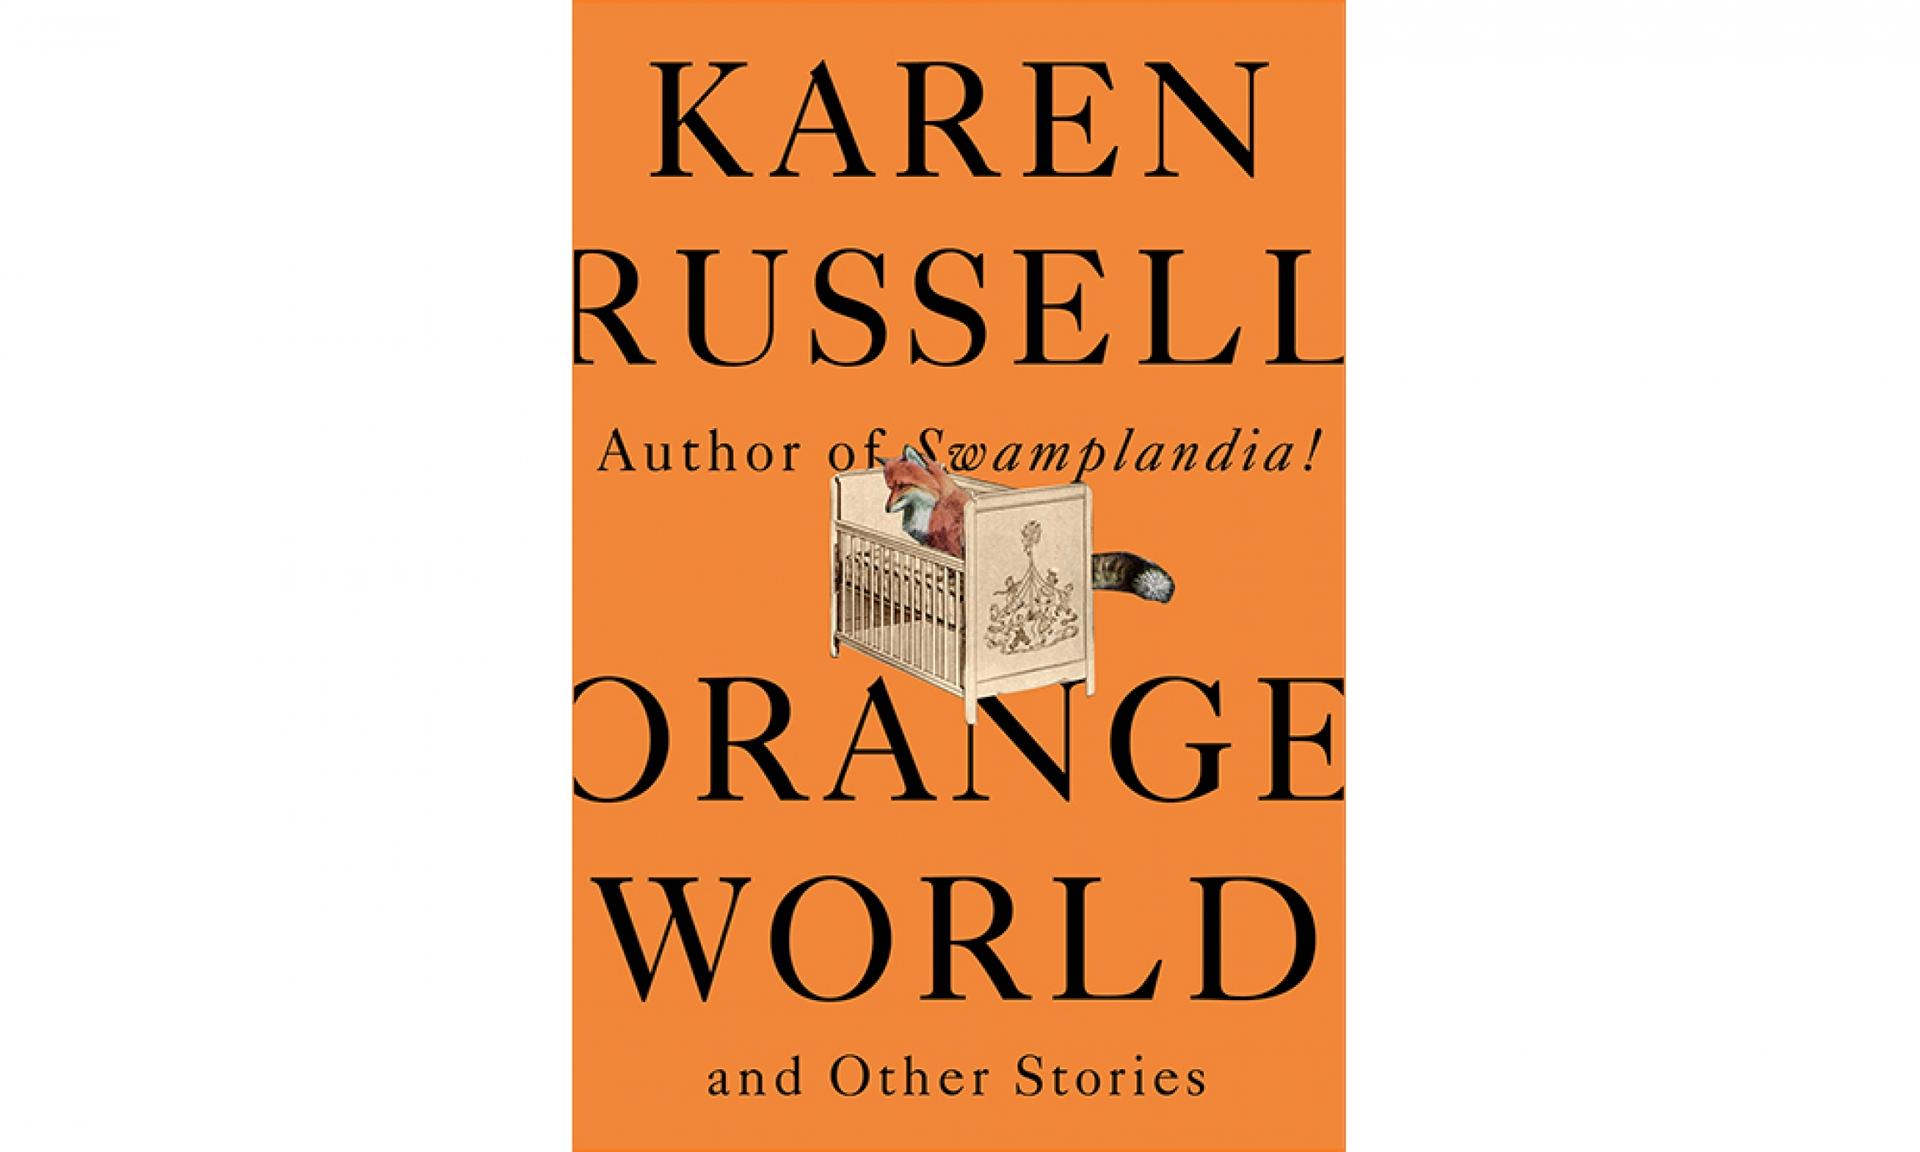 Karen Russell’s new short story collection, “Orange World.”